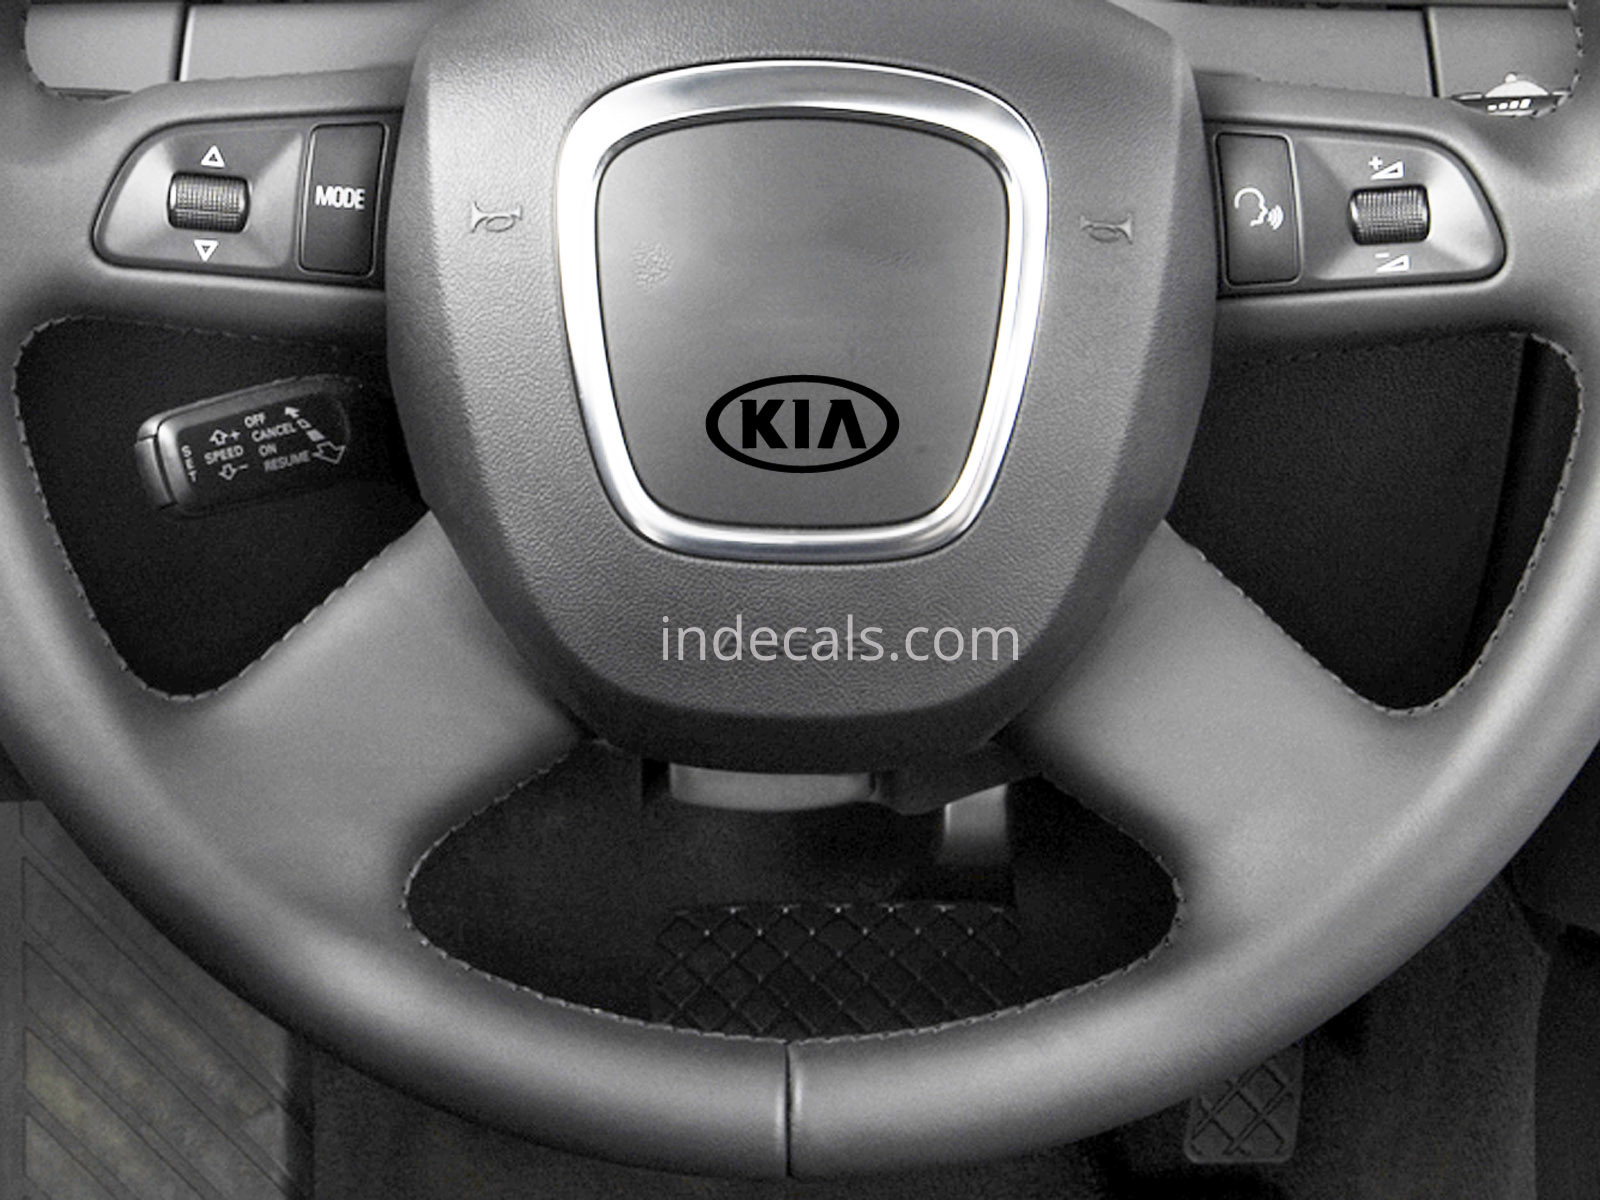 3 x KIA Stickers for Steering Wheel - Black